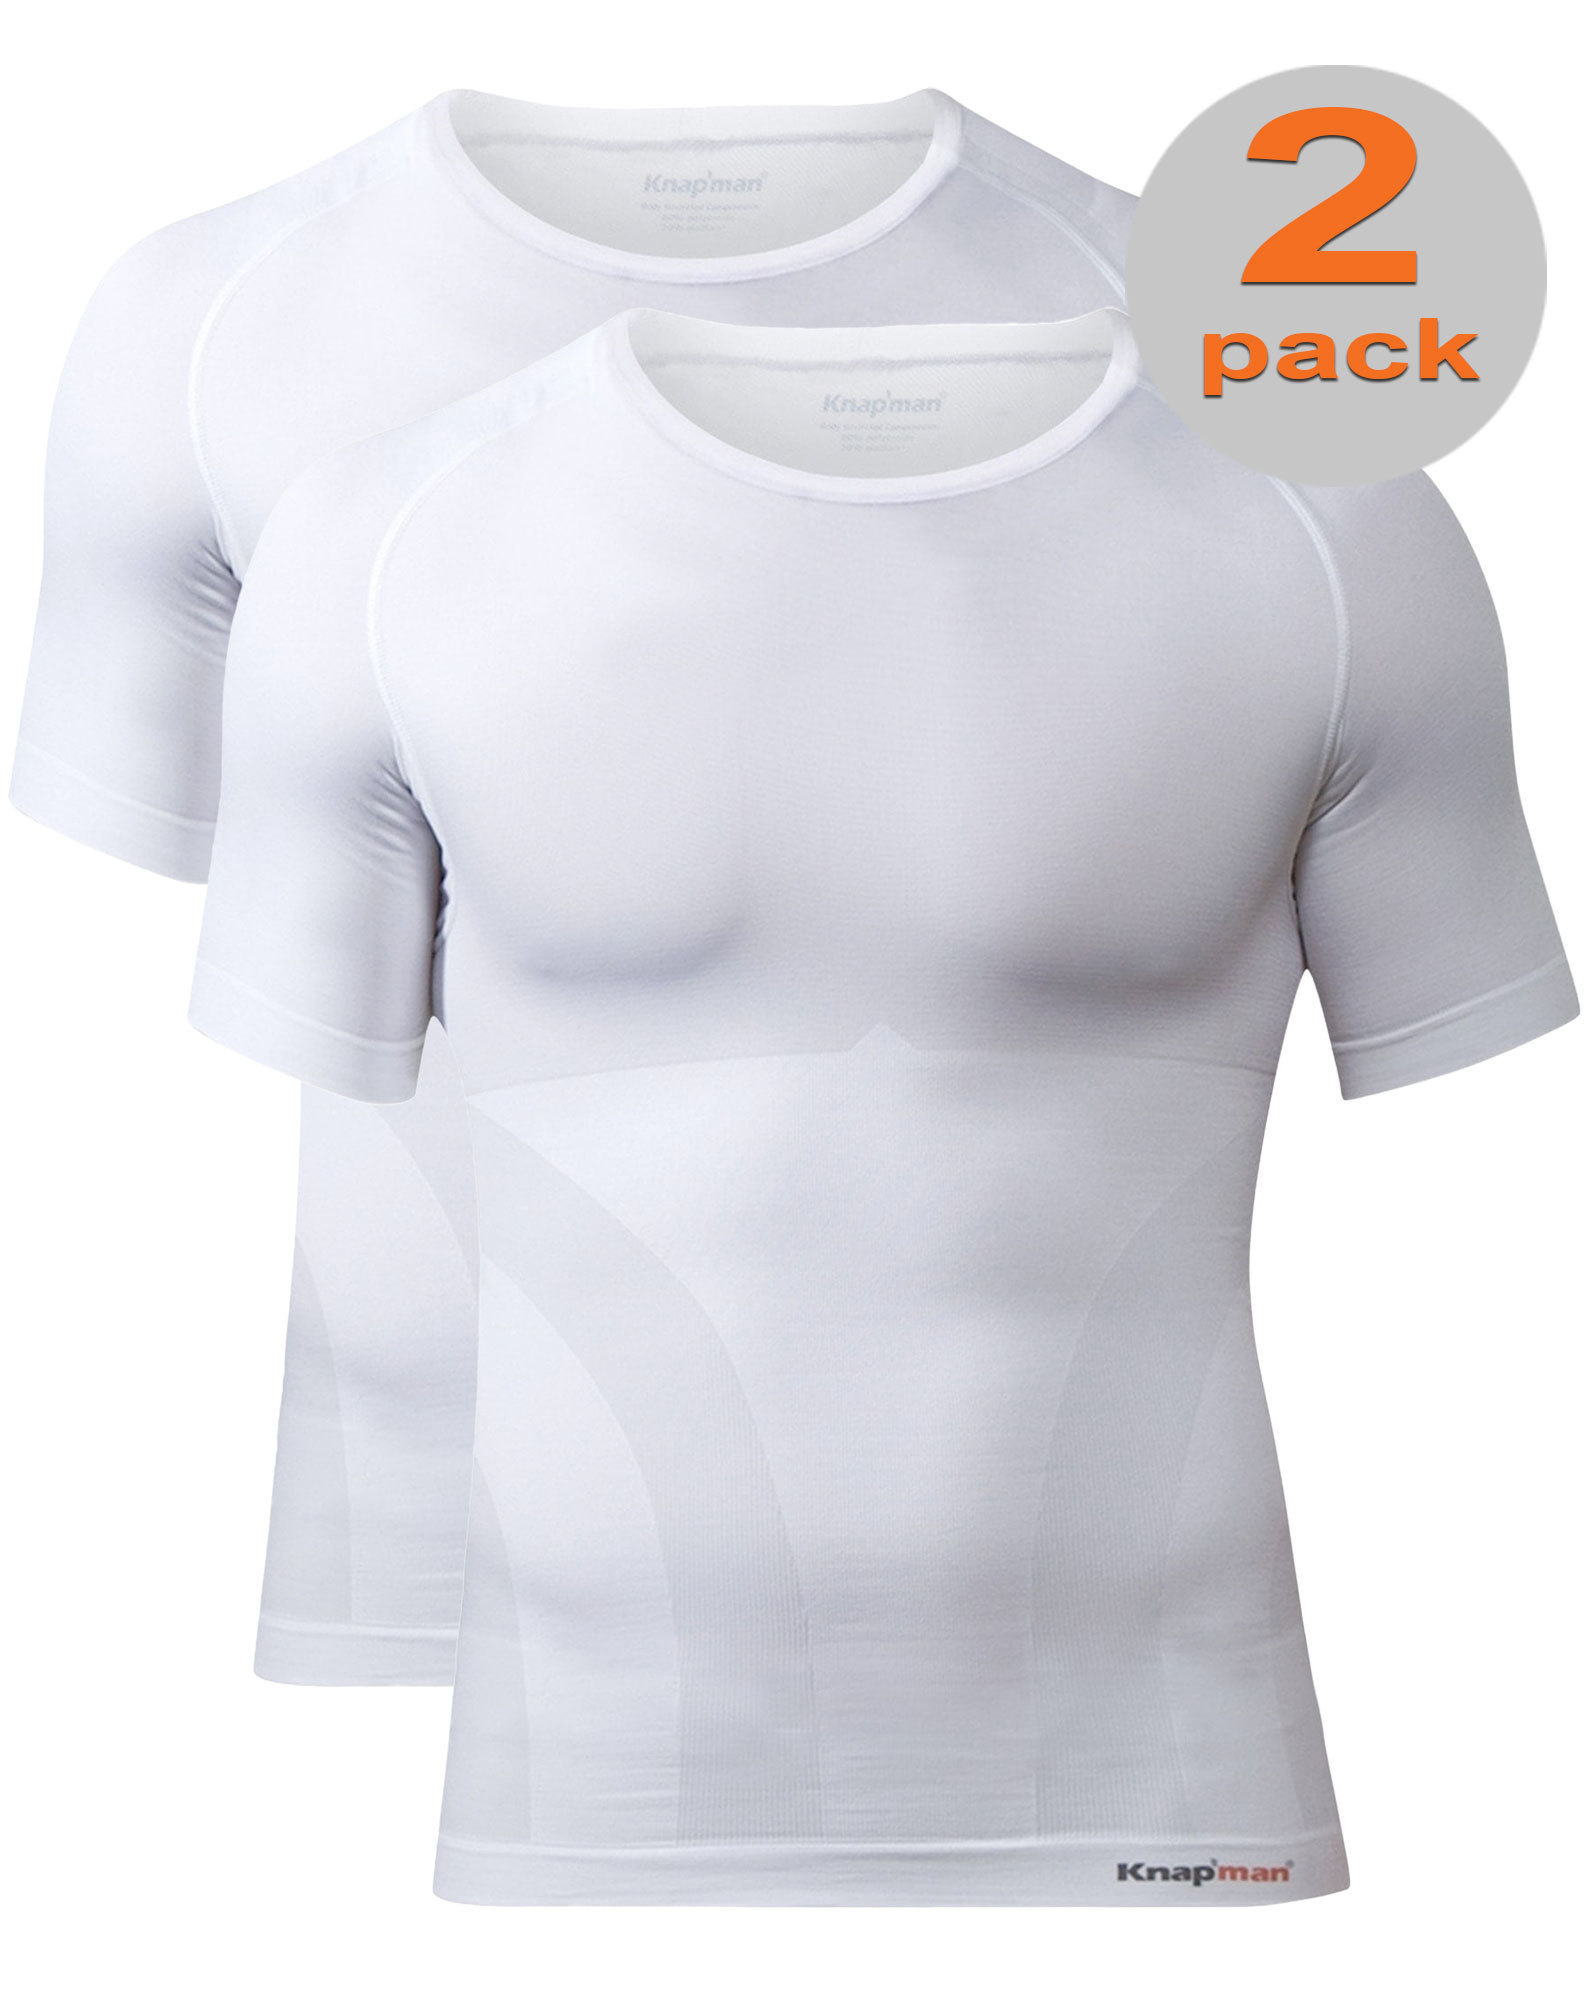 MCDAVID Men's Compression Shirt Size L Black Short Sleeve Workout